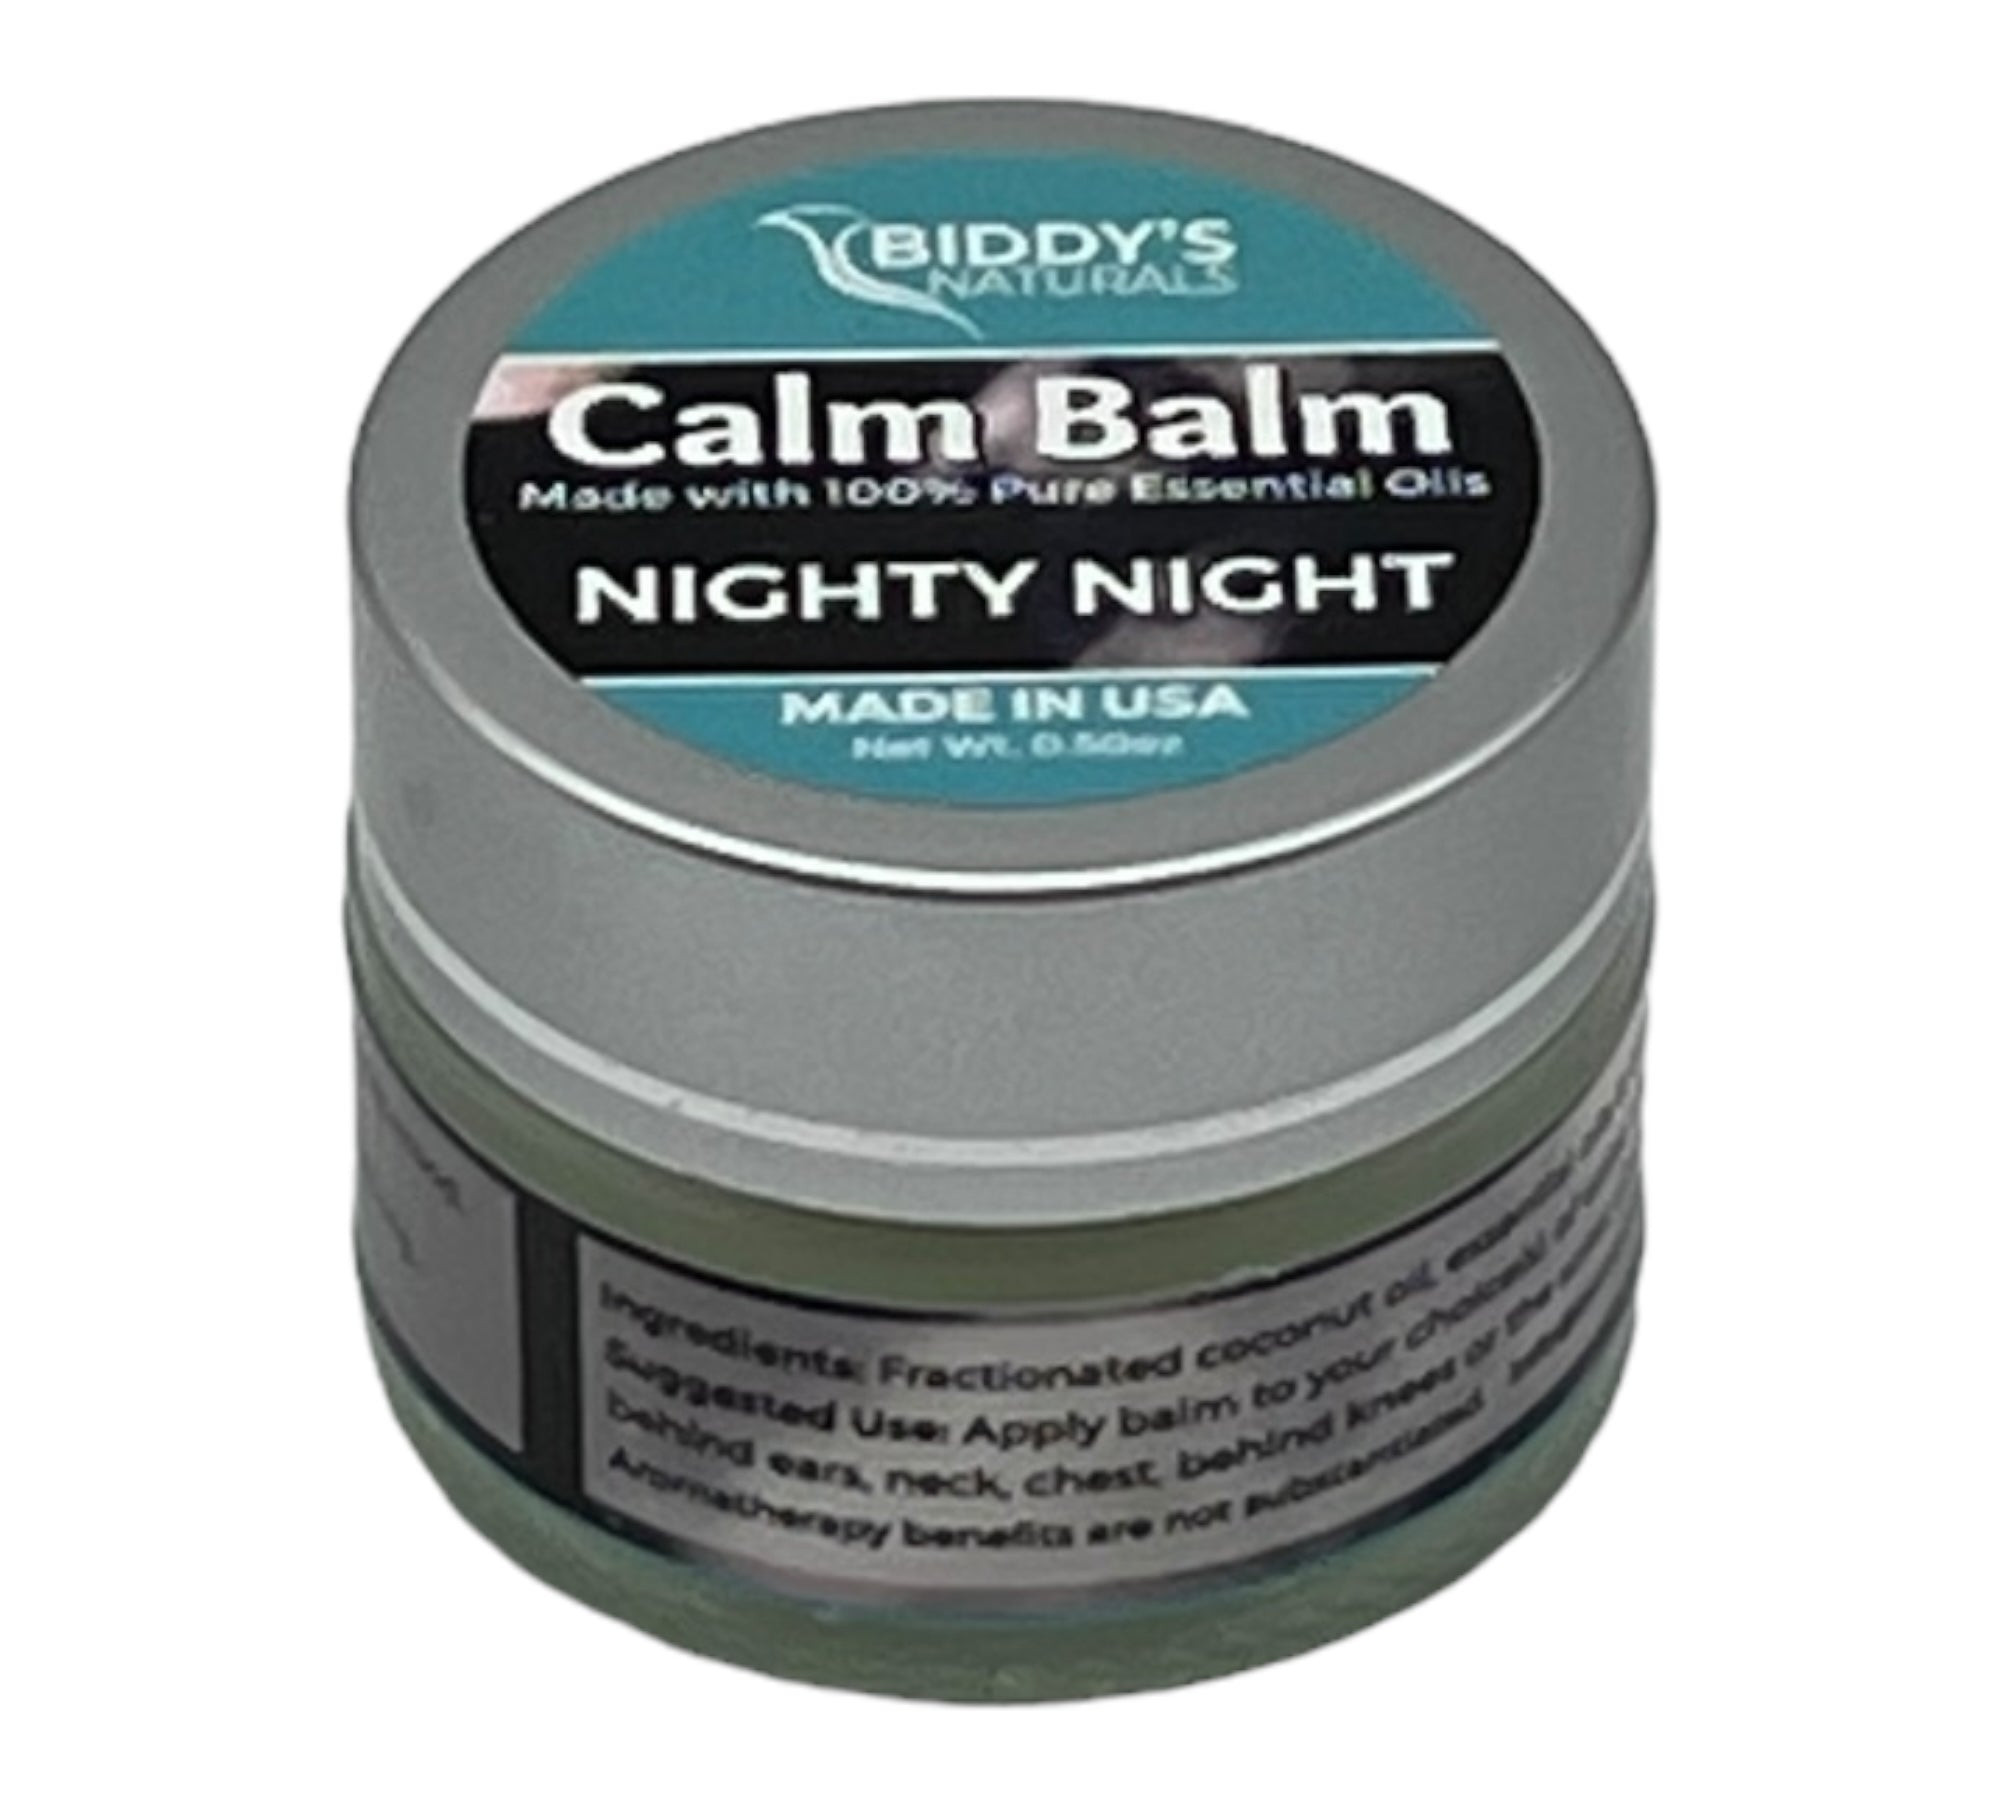 Nighty Night Calm Balm Solid Perfume 100% Pure Essential Oils